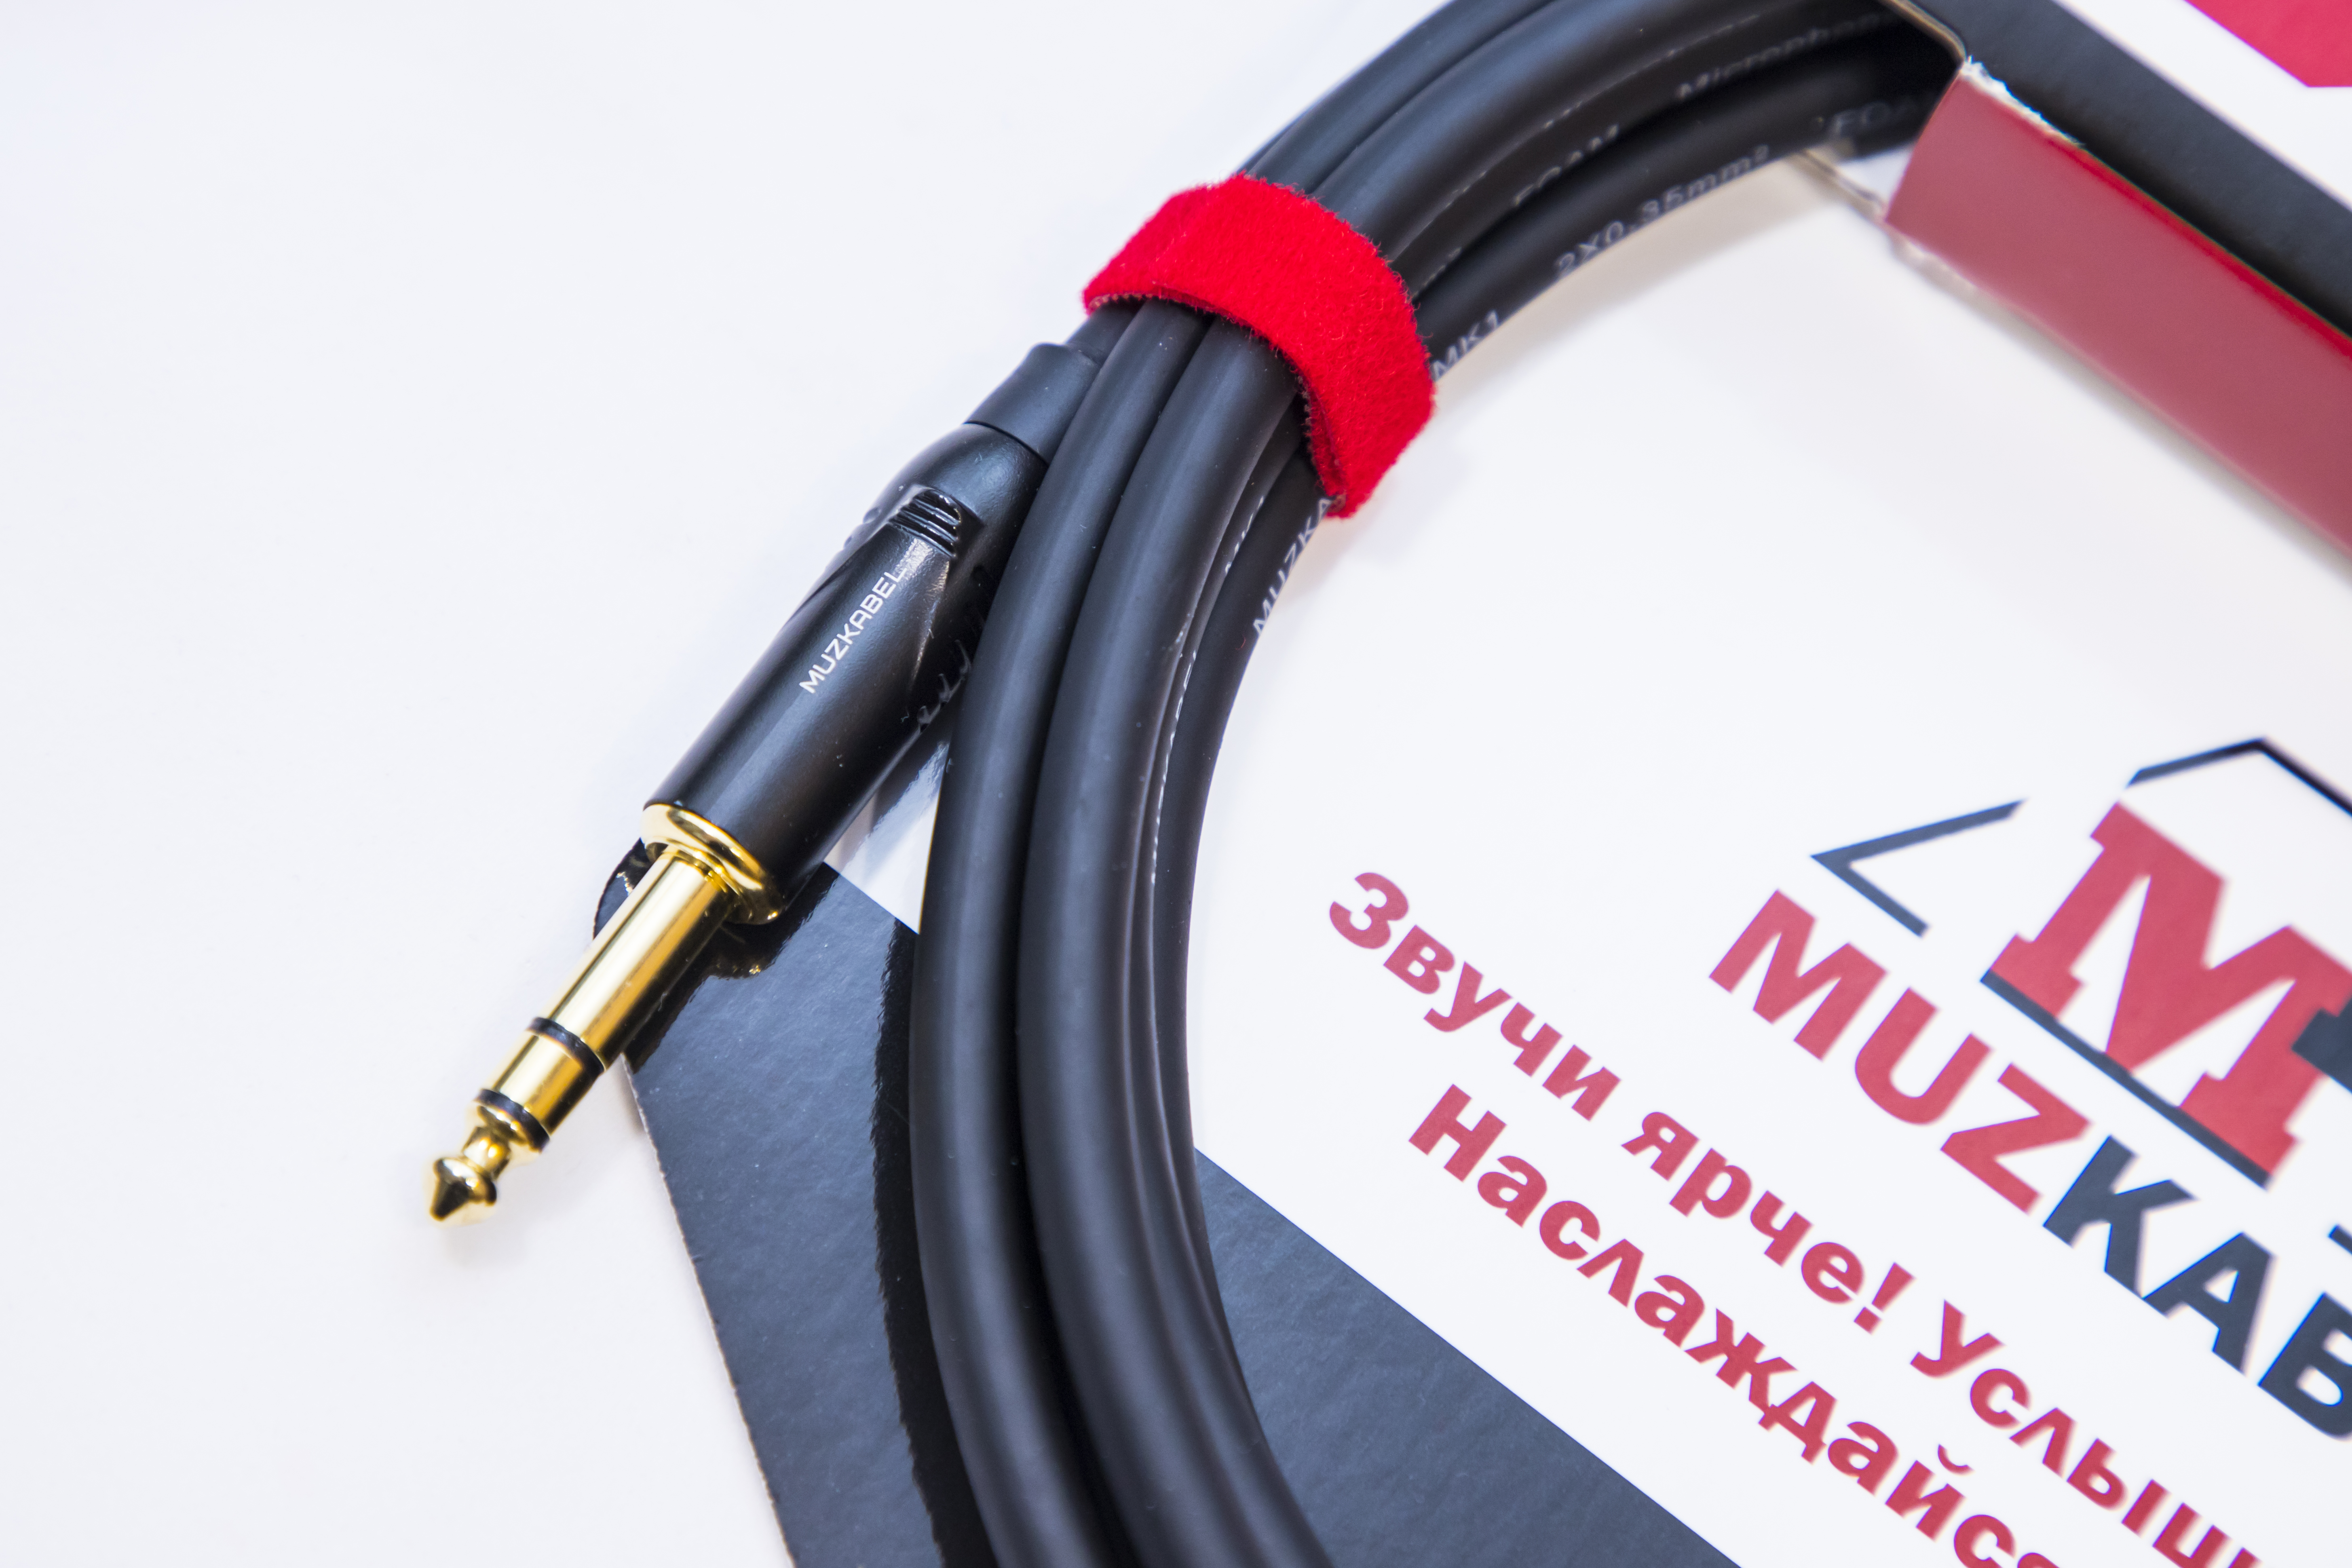 Аудио кабель MUZKABEL BXRMK3 - 1 метр, XLR (папа) - JACK (стерео)